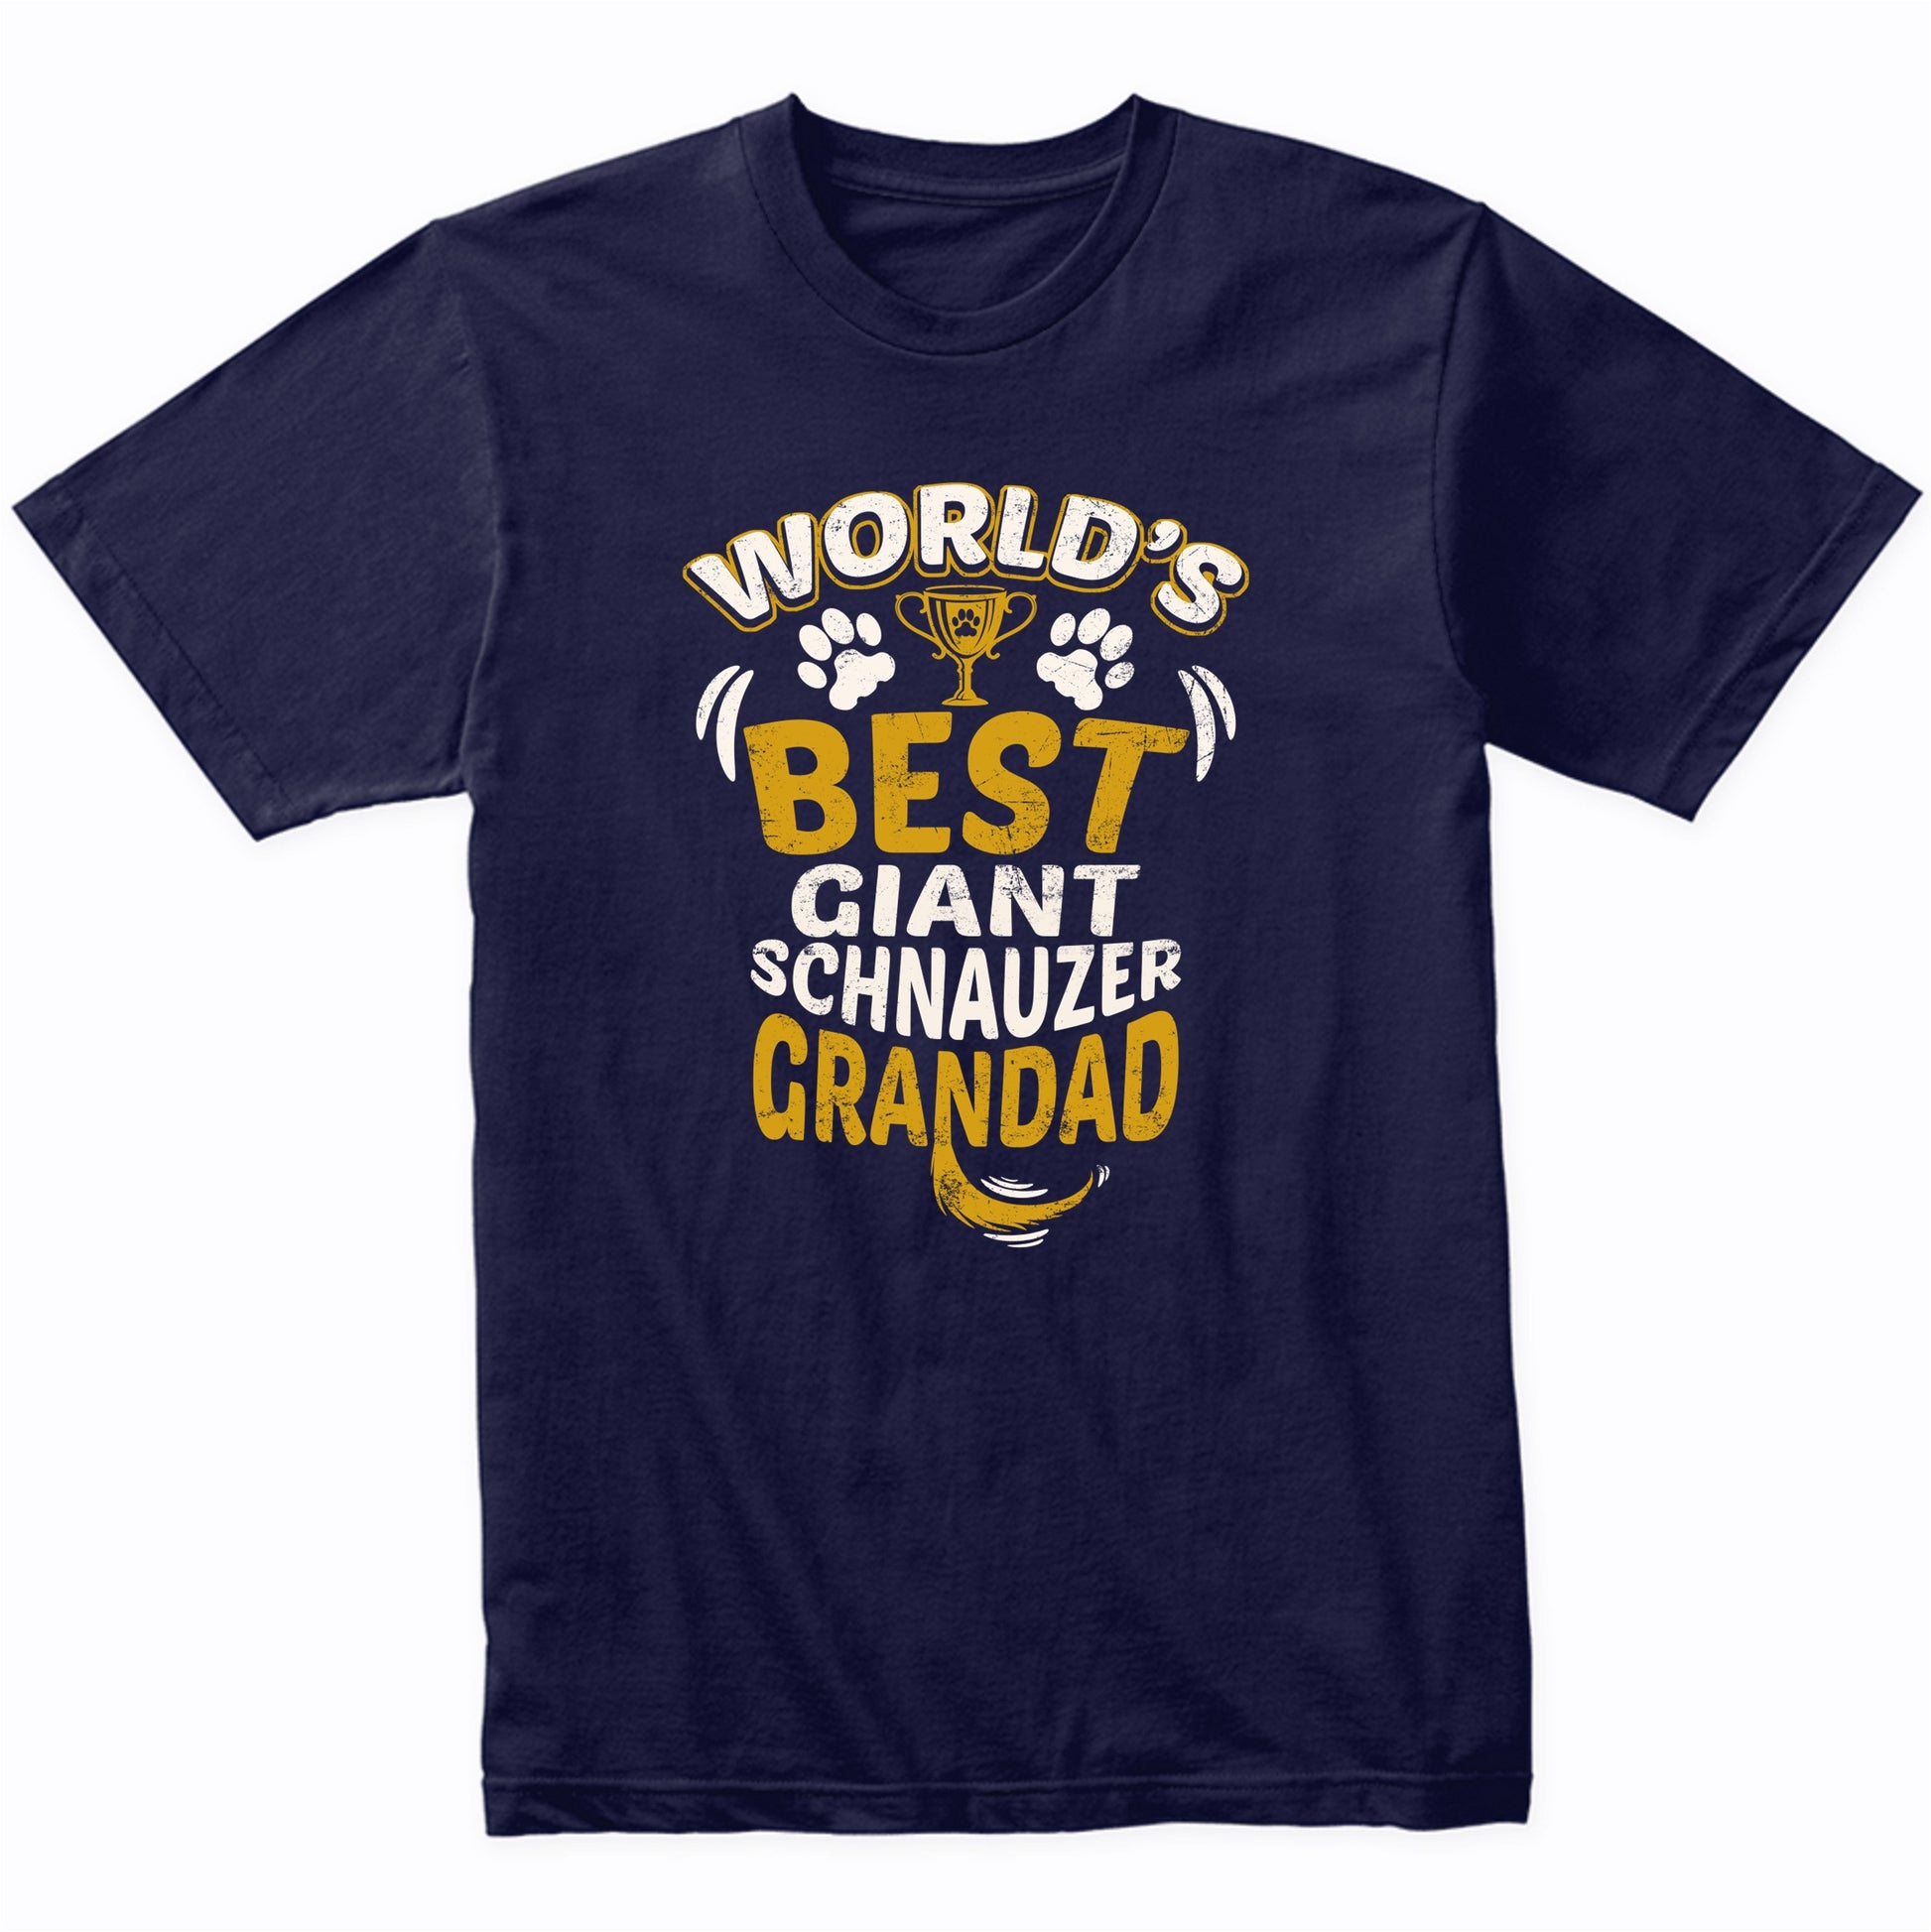 World's Best Giant Schnauzer Grandad Graphic T-Shirt